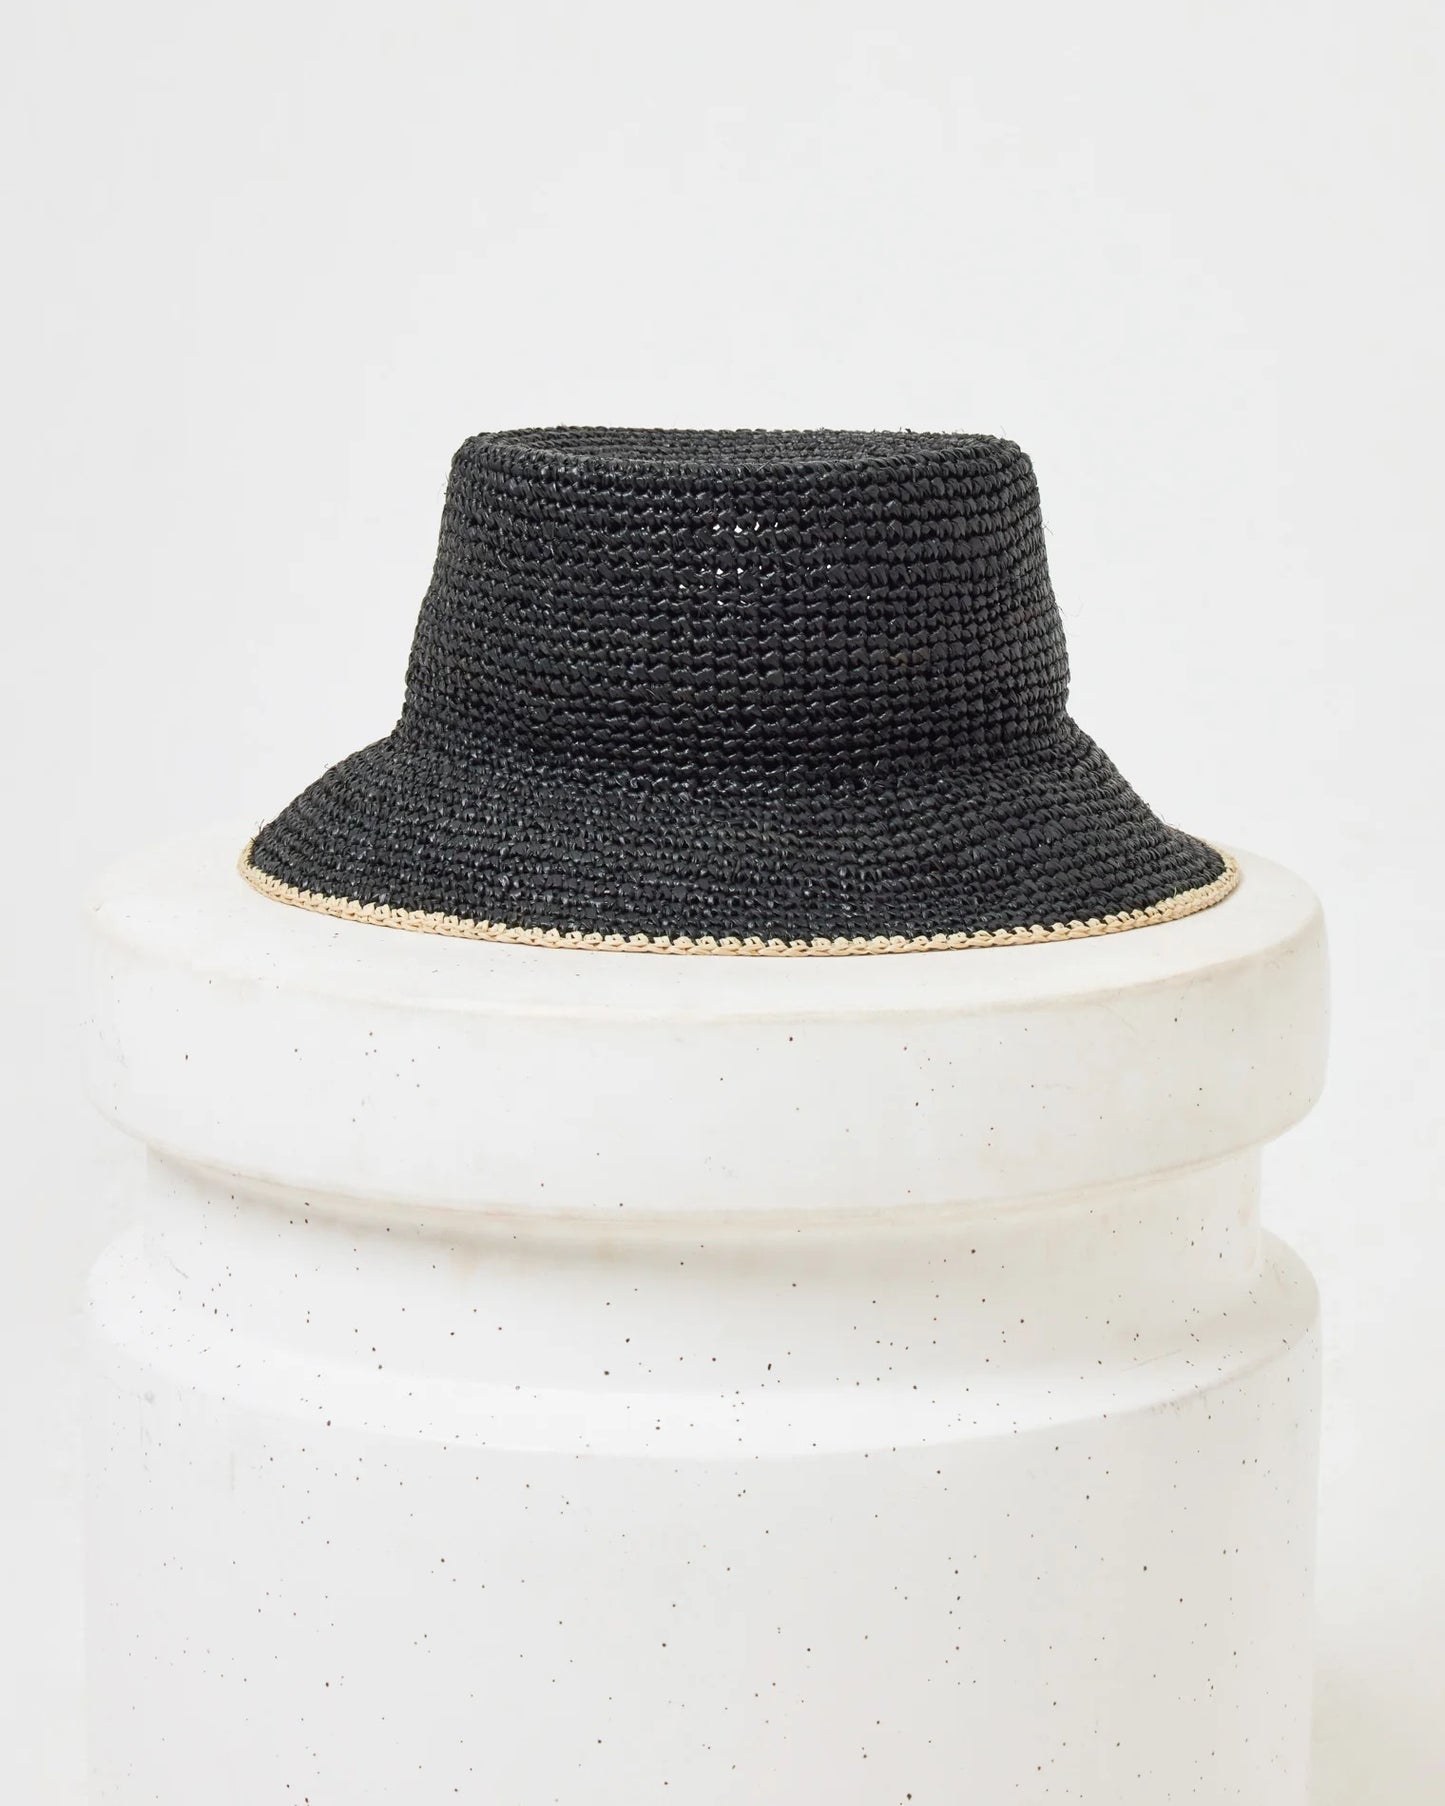 LSpace Isadora Bucket Hat in Black Cream